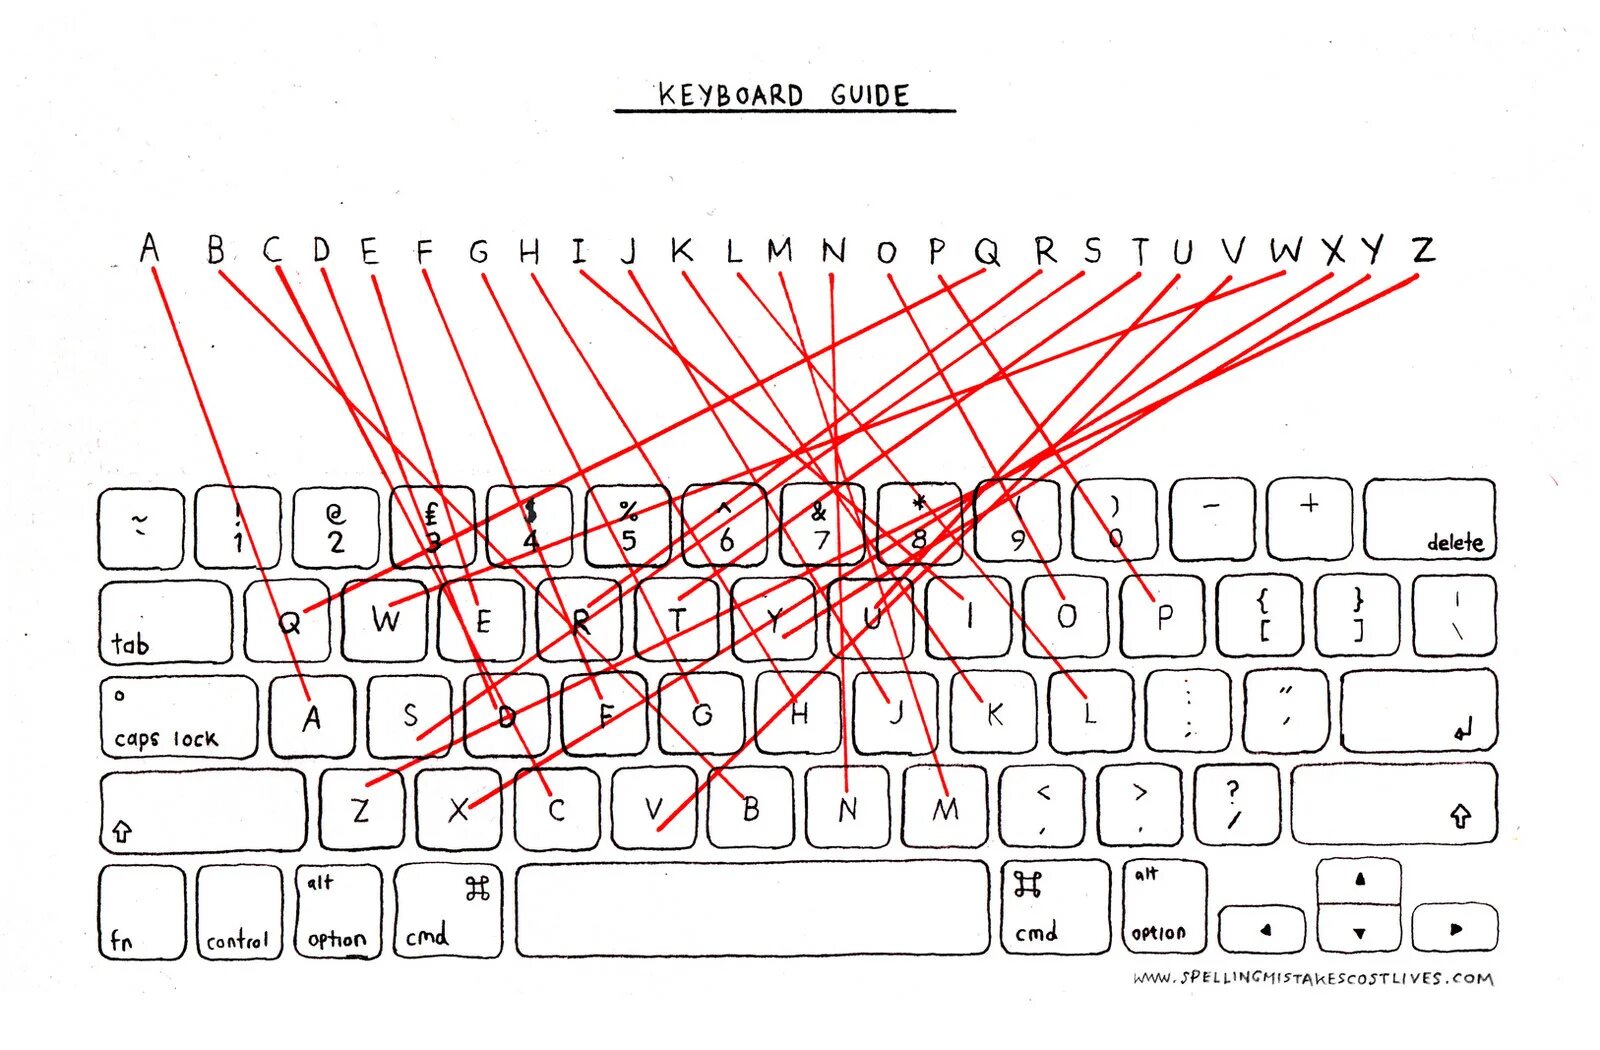 Показ нажатых клавиш. Keyboard Guide. Web вкладка клавиатуры. Naya create Keyboard. Bobby Keyboard.